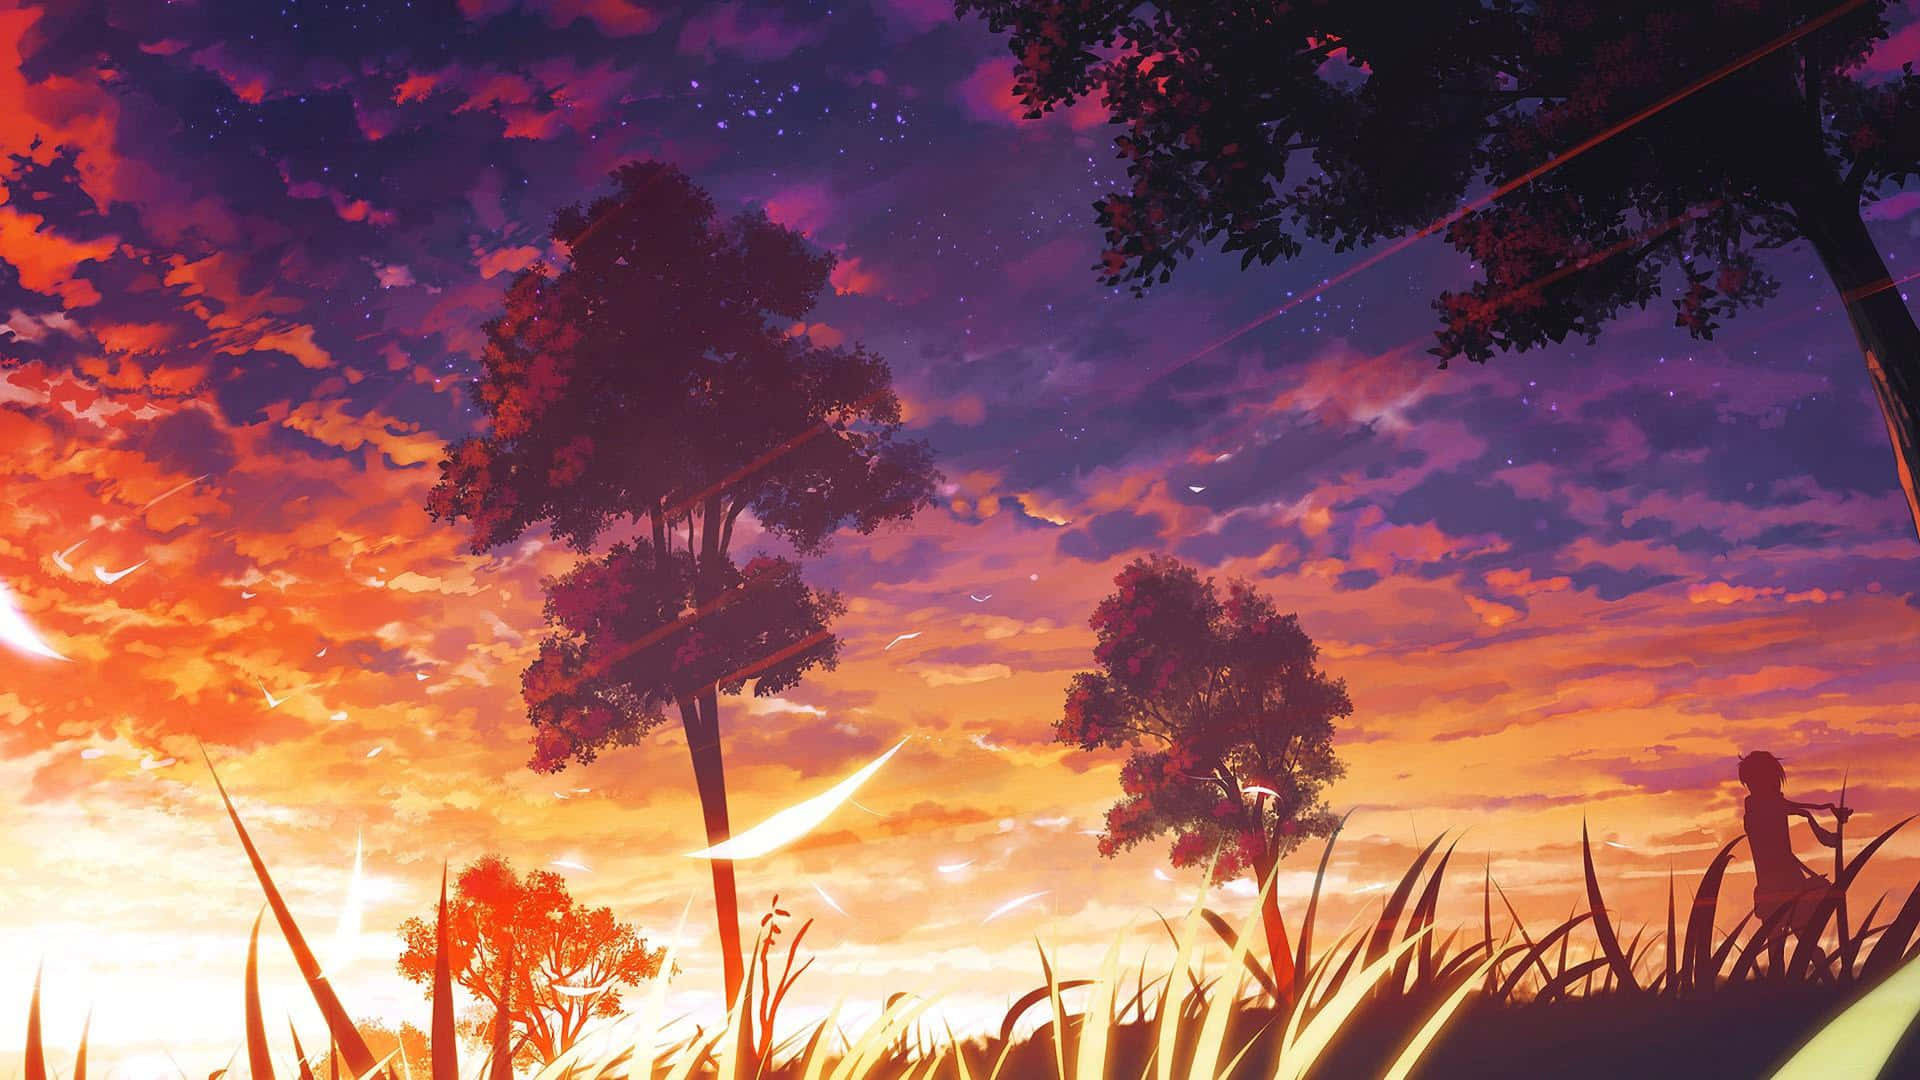 "A mystical travel through an anime forest" Wallpaper